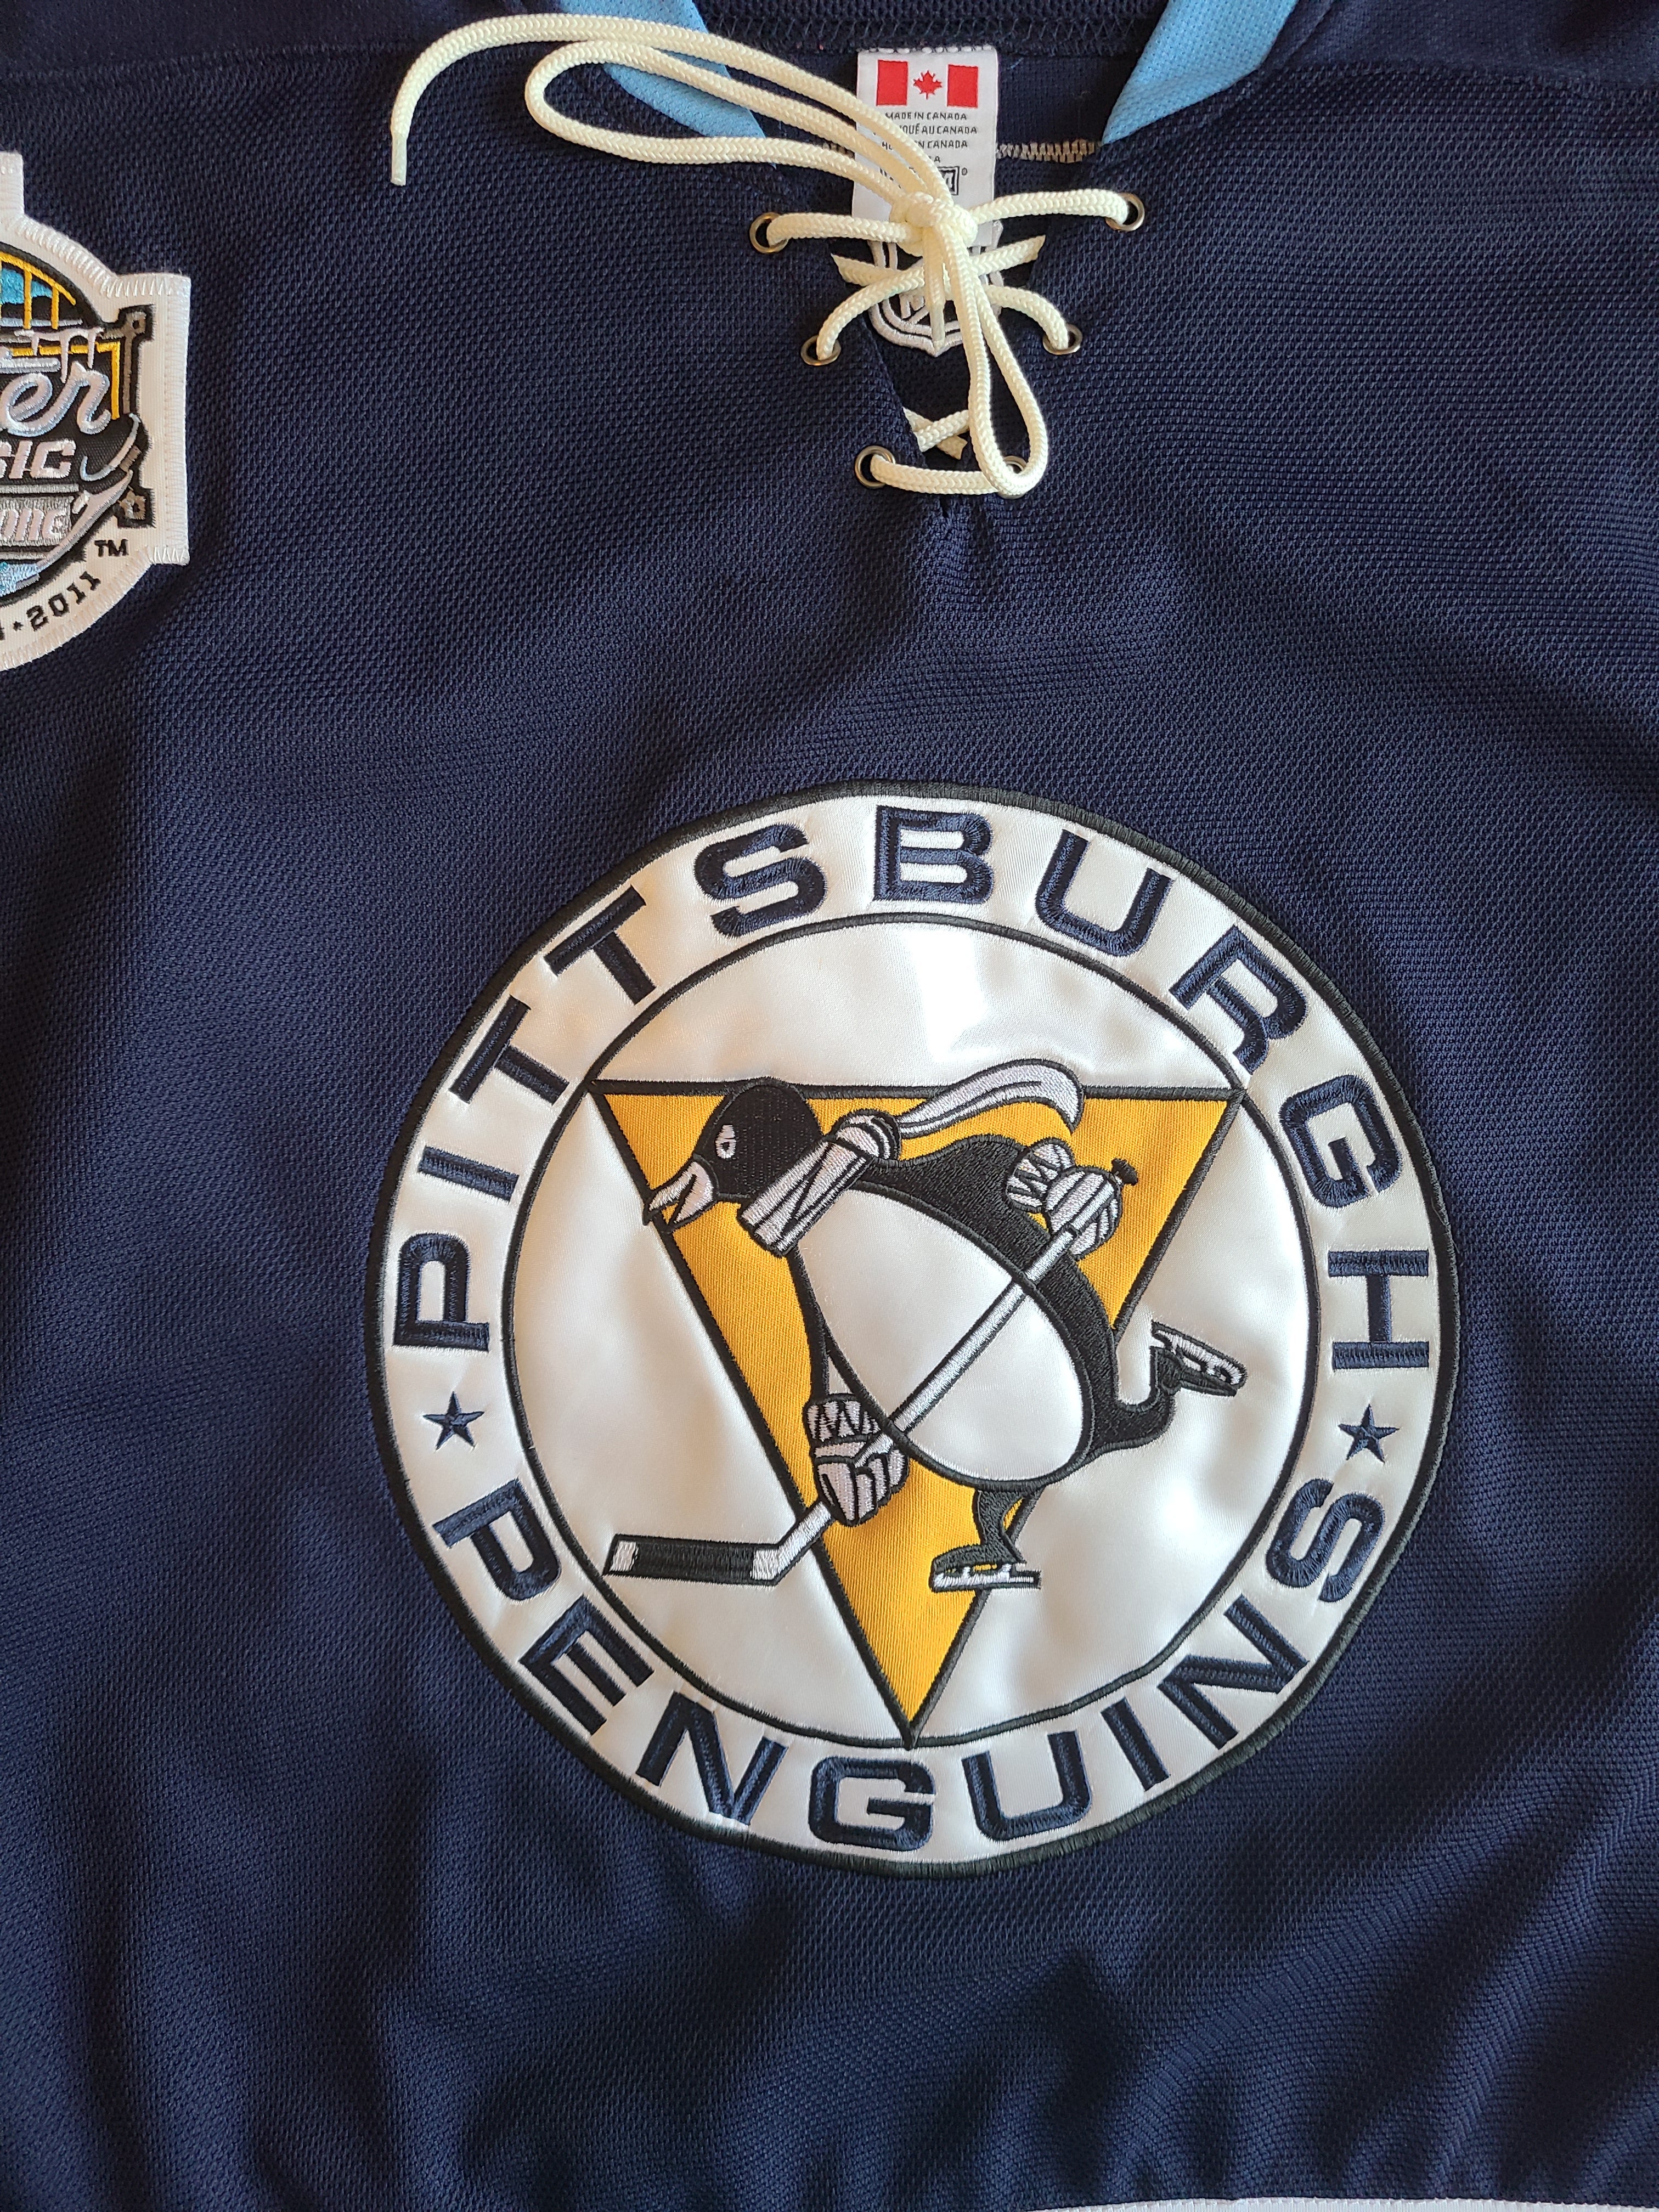 Reebok Sidney Crosby Pittsburgh Penguins 2011 Winter Classic NHL Jersey  Blue M